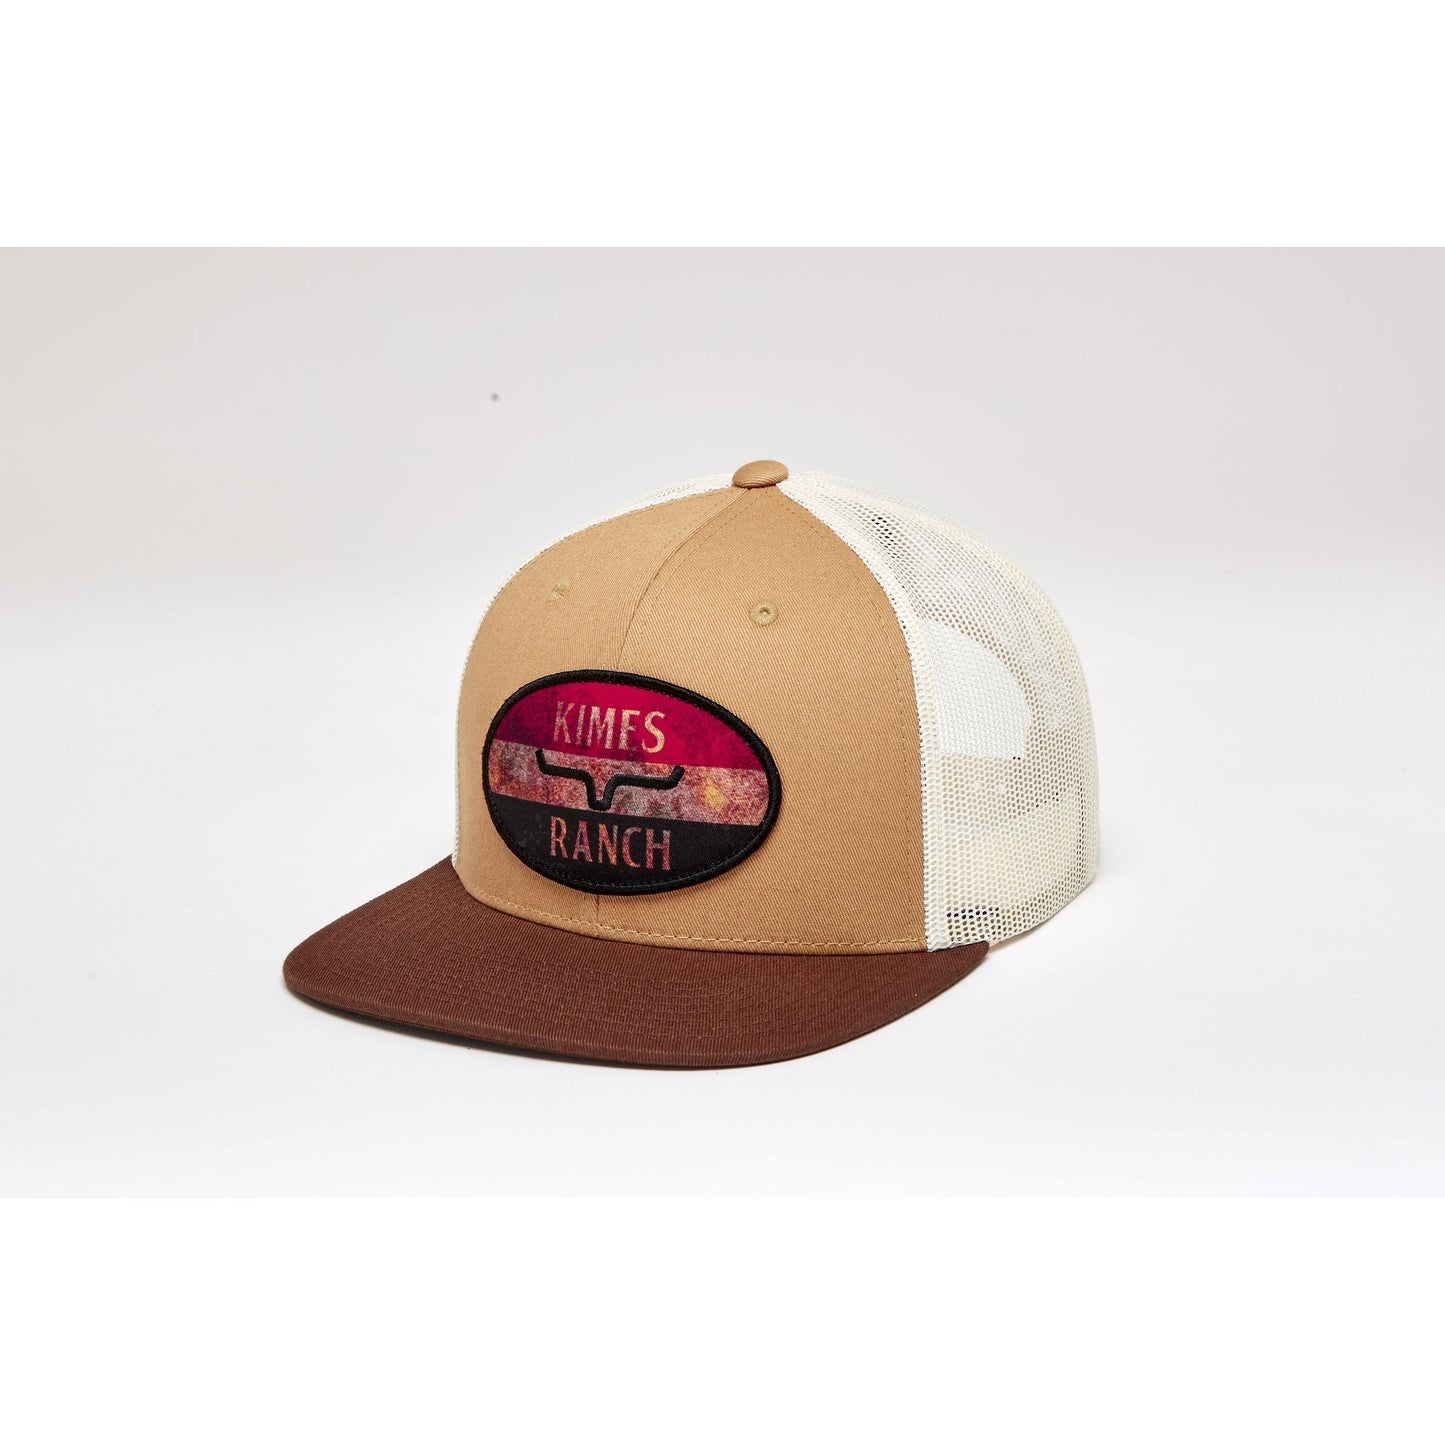 Ranch Nite American Standard Trucker Hat Workwear Brown